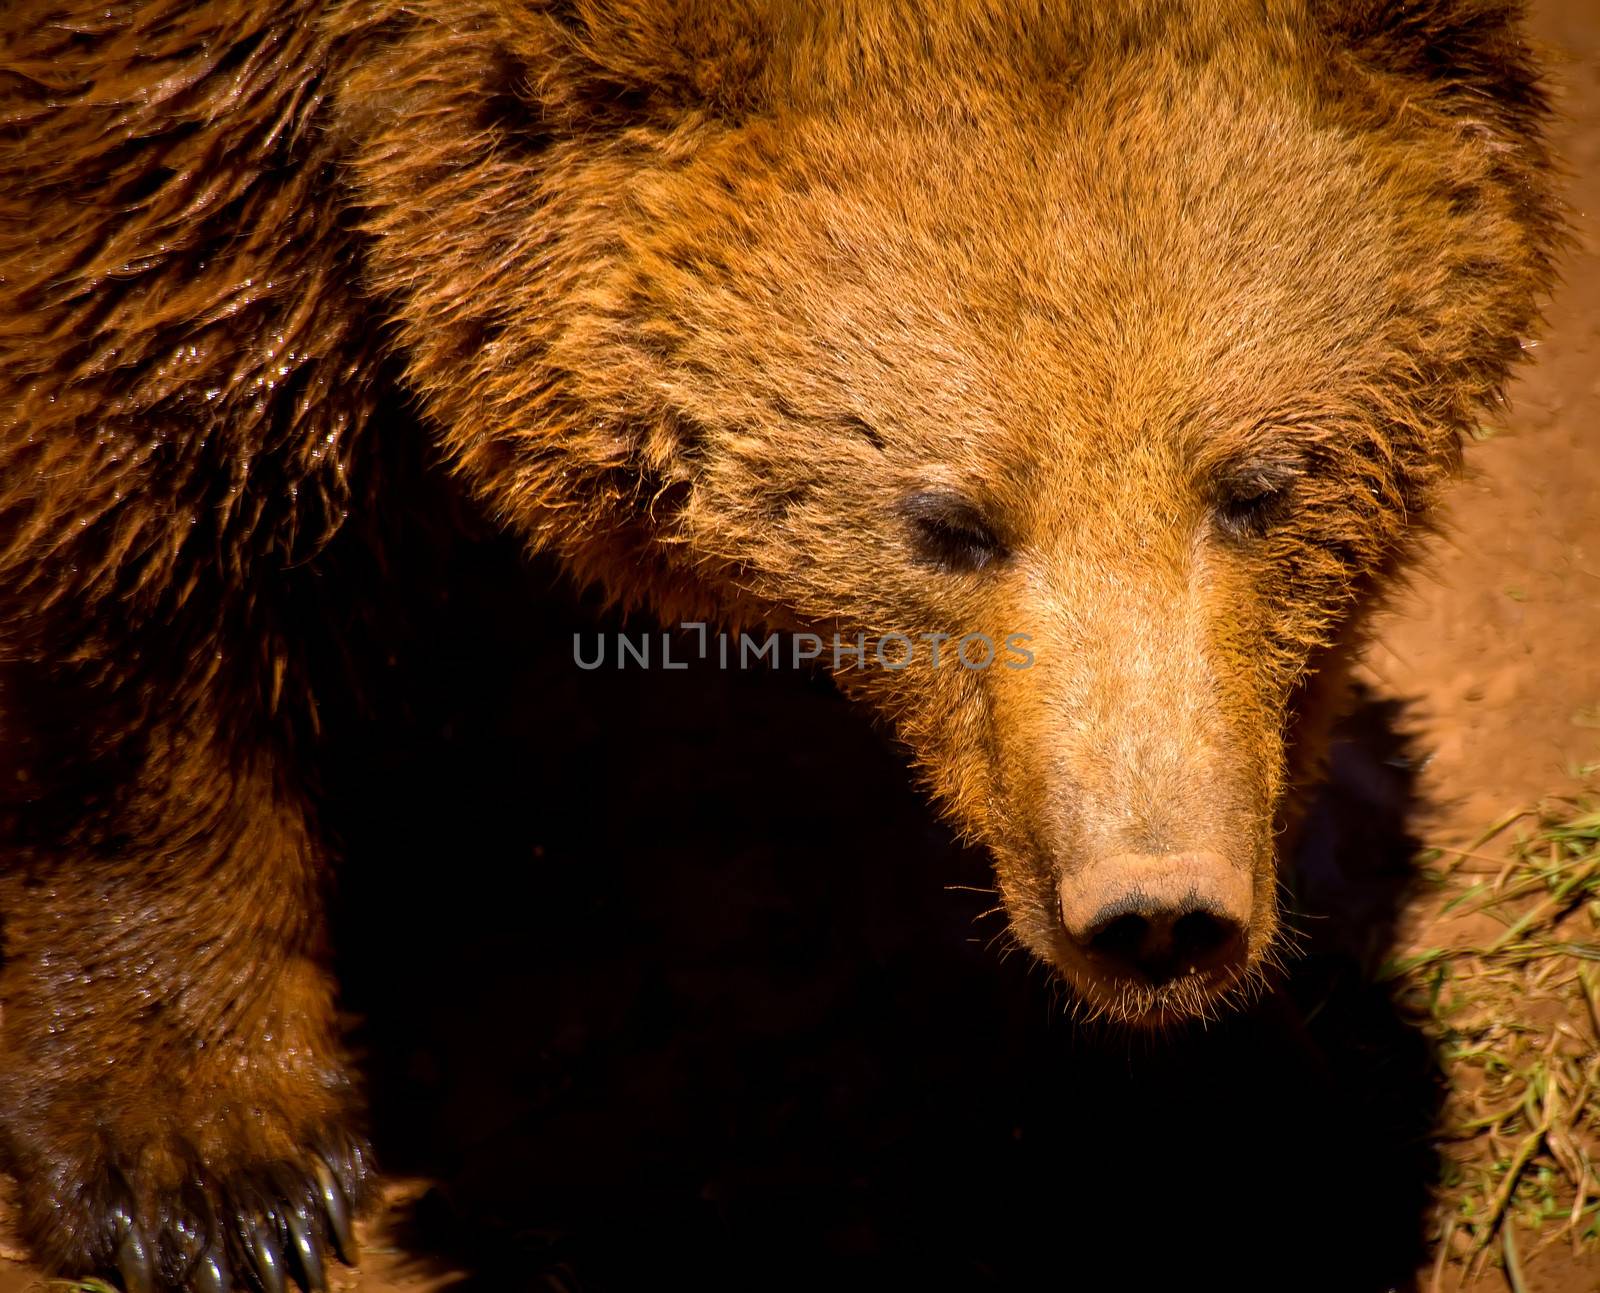 portrait of a brown bear